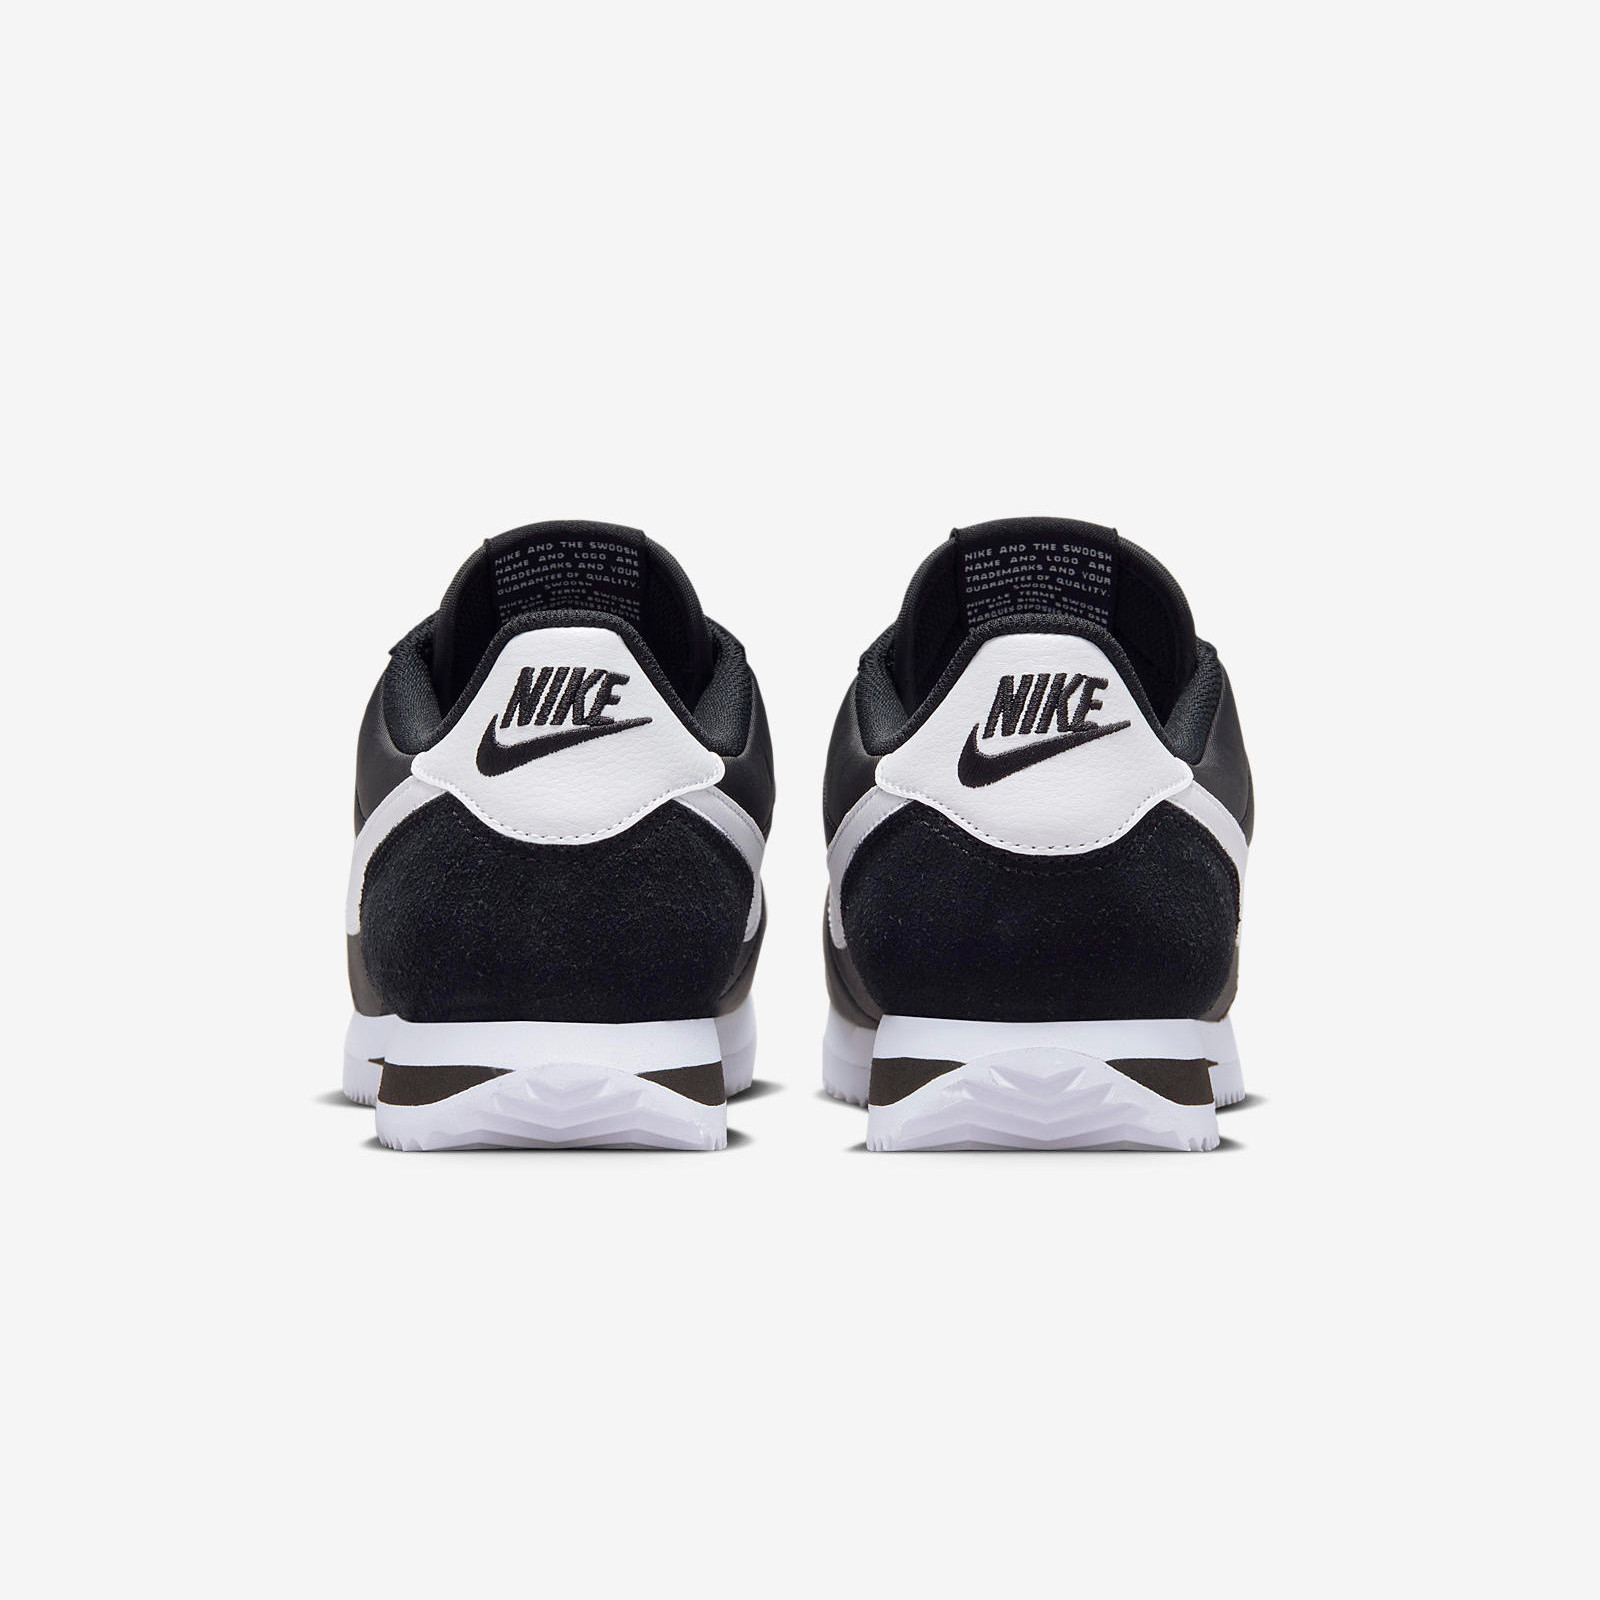 Nike Cortez
Black / White